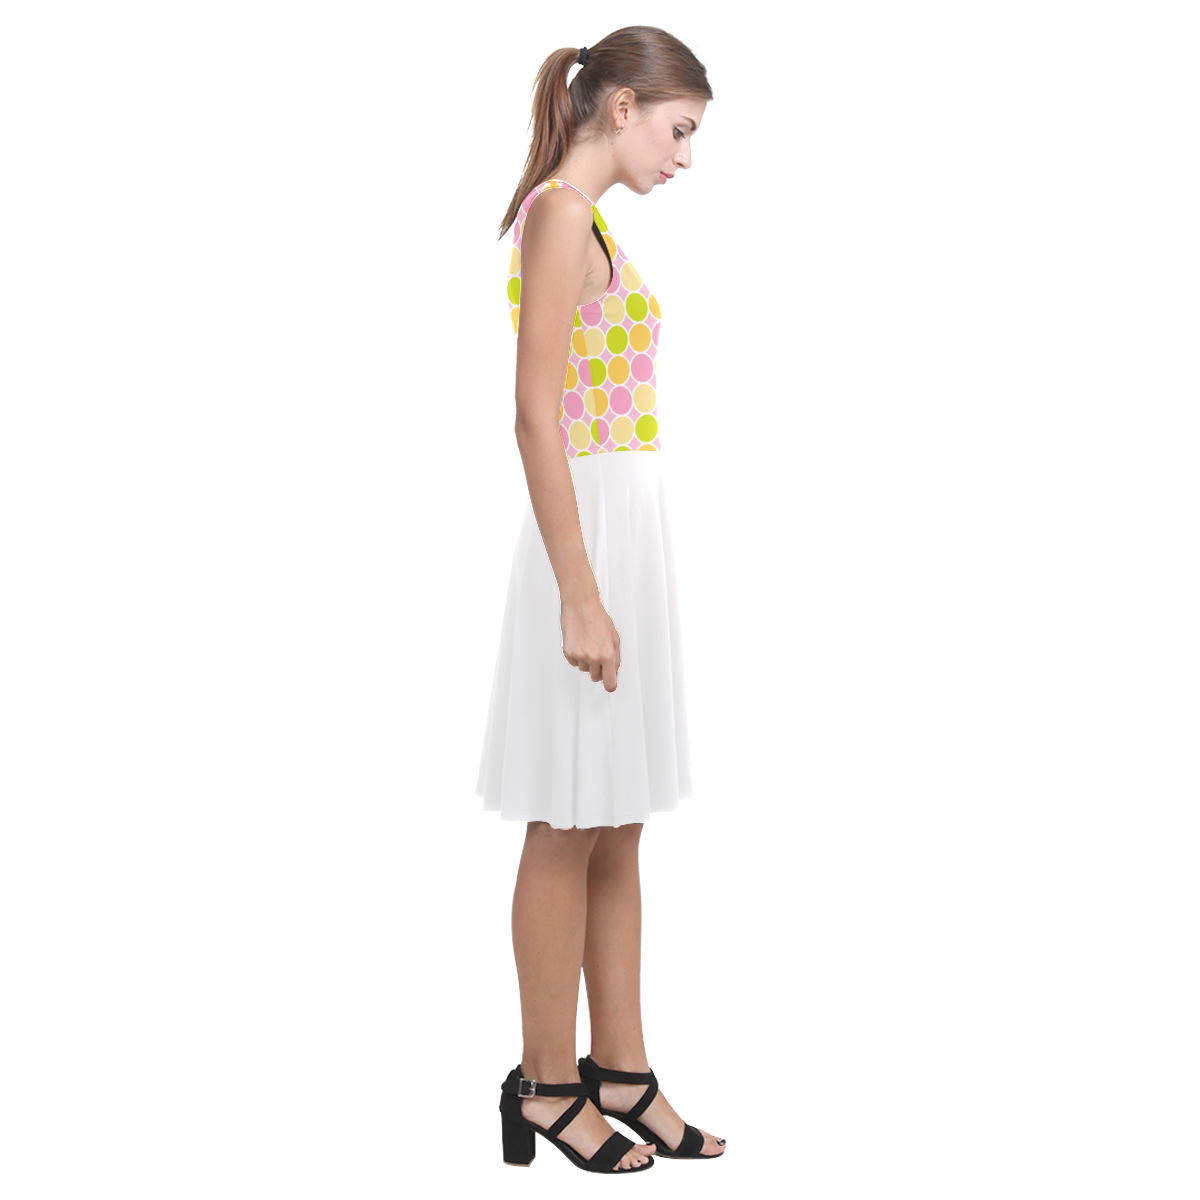 Polka Dots - Sundresses for Women Casual - Cute Flowy Ladies Patterns - Atalanta Casual Sundress(Model D04)